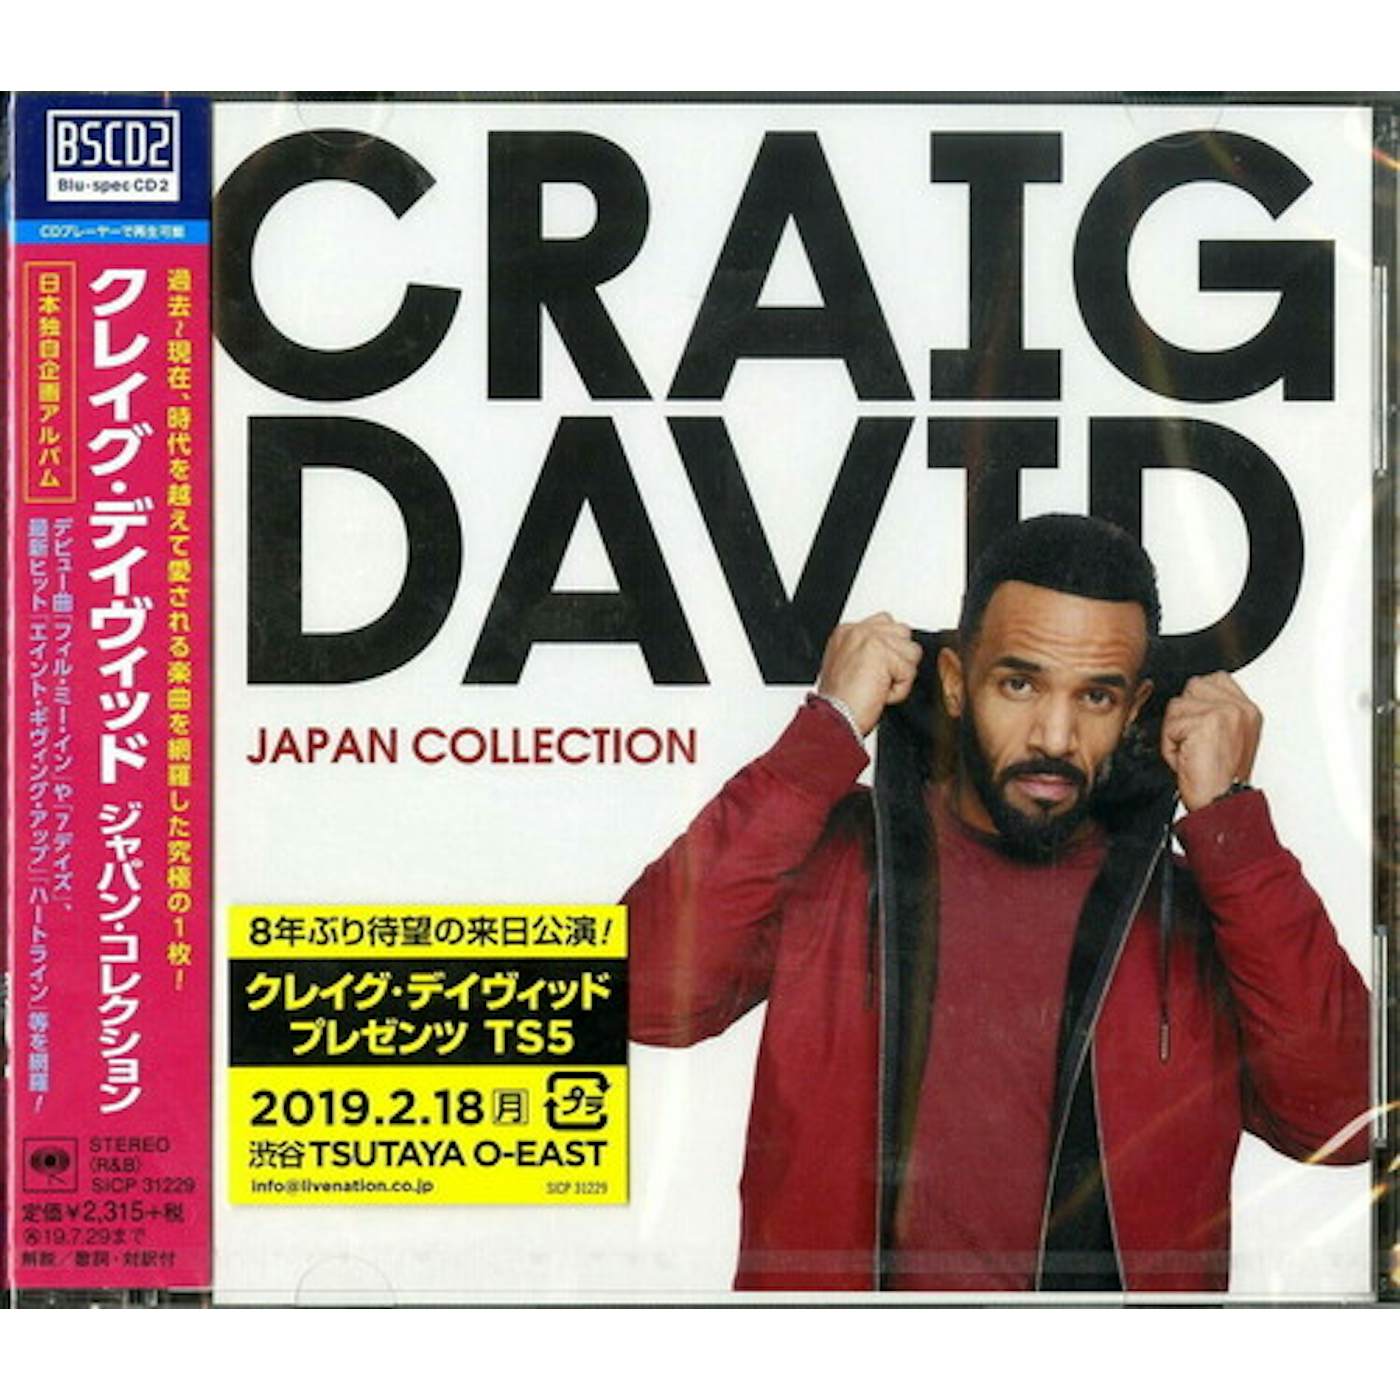 Craig David JAPAN COLLECTION CD